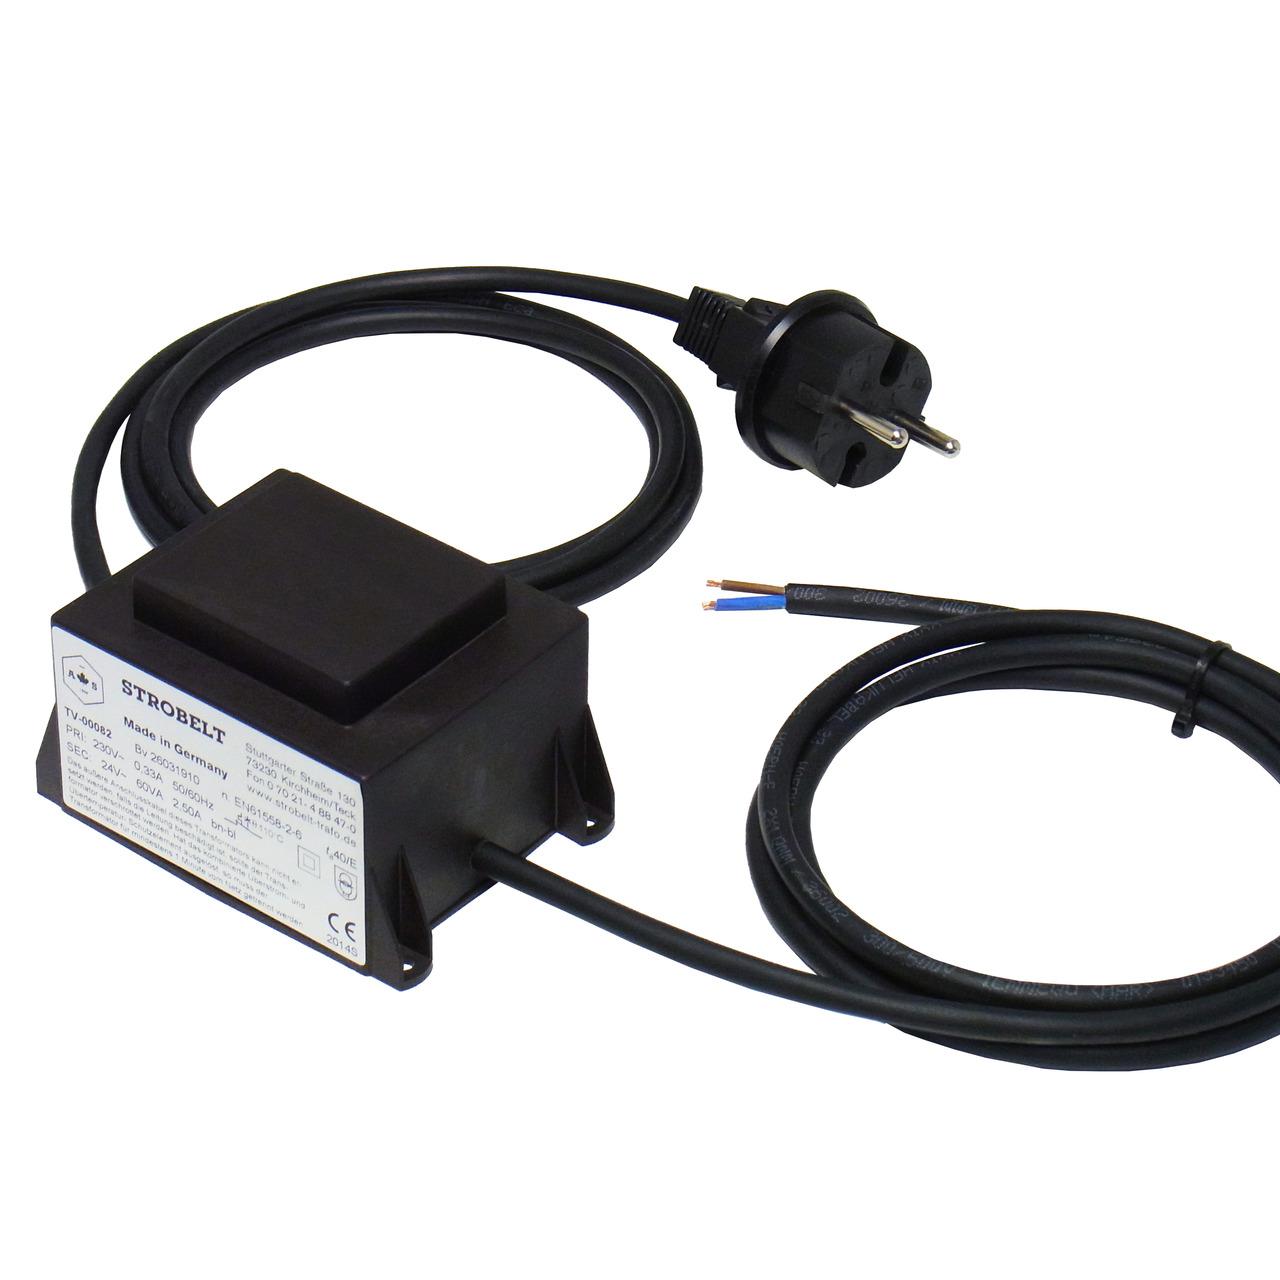 Strobelt Sicherheitstransformator 60 VA- 230V- 50-60 Hz- SEC 24V AC- vergossen in Gehuse- IP44